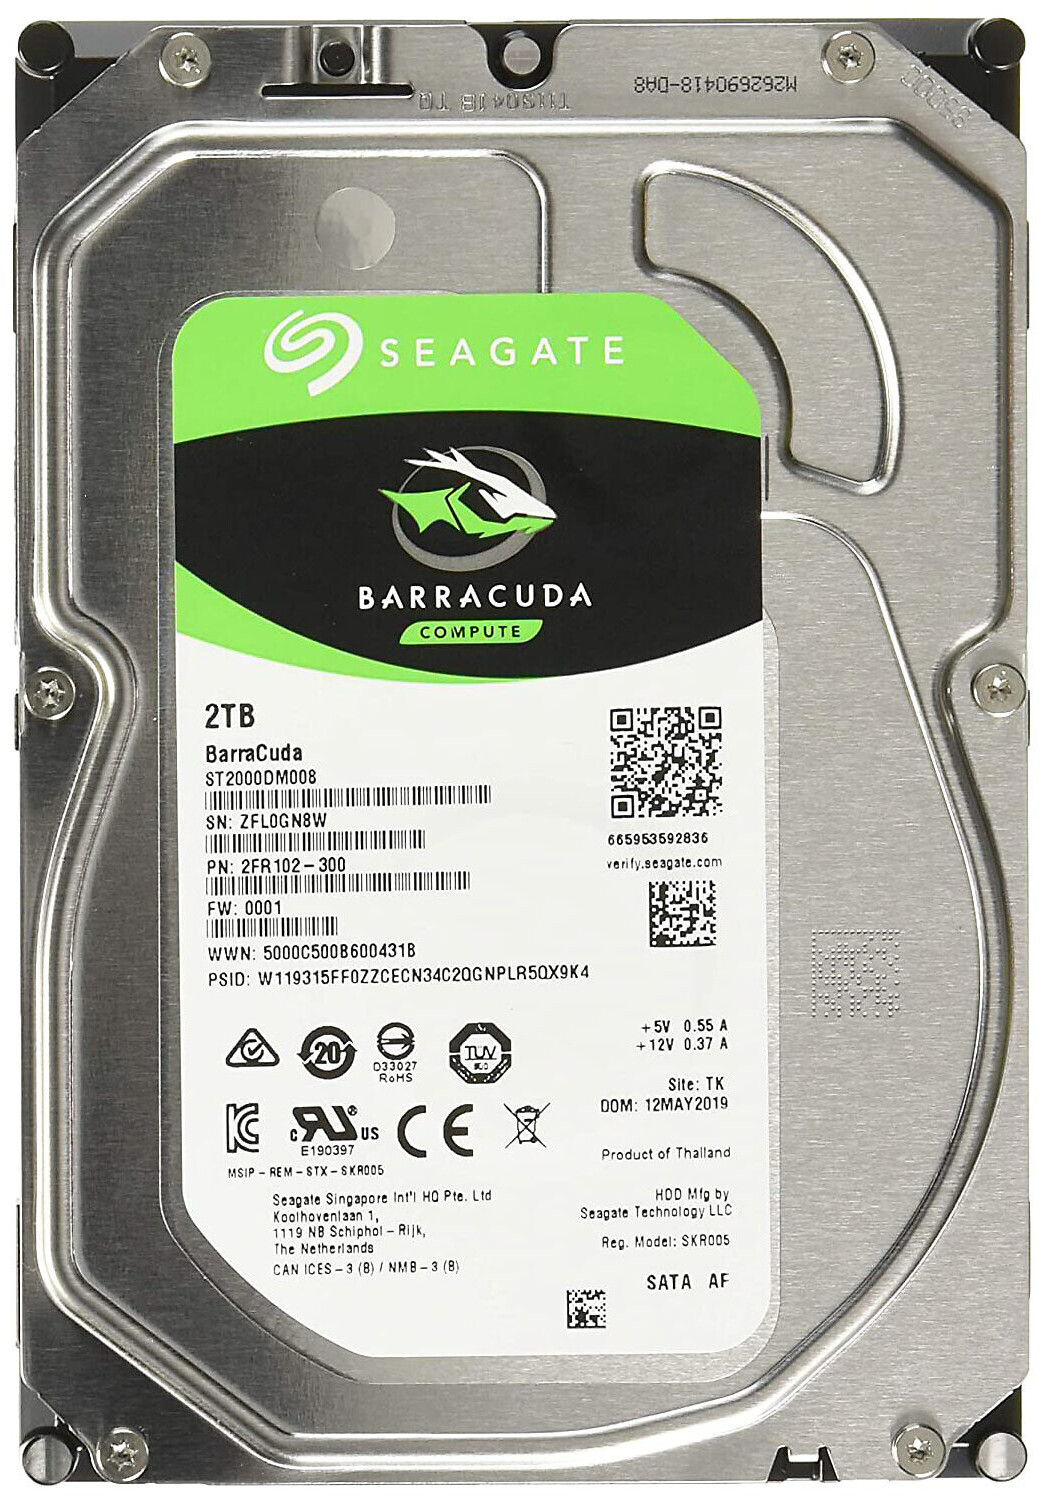 Vente flash sur un gros disque dur Seagate BarraCuda de 2 To